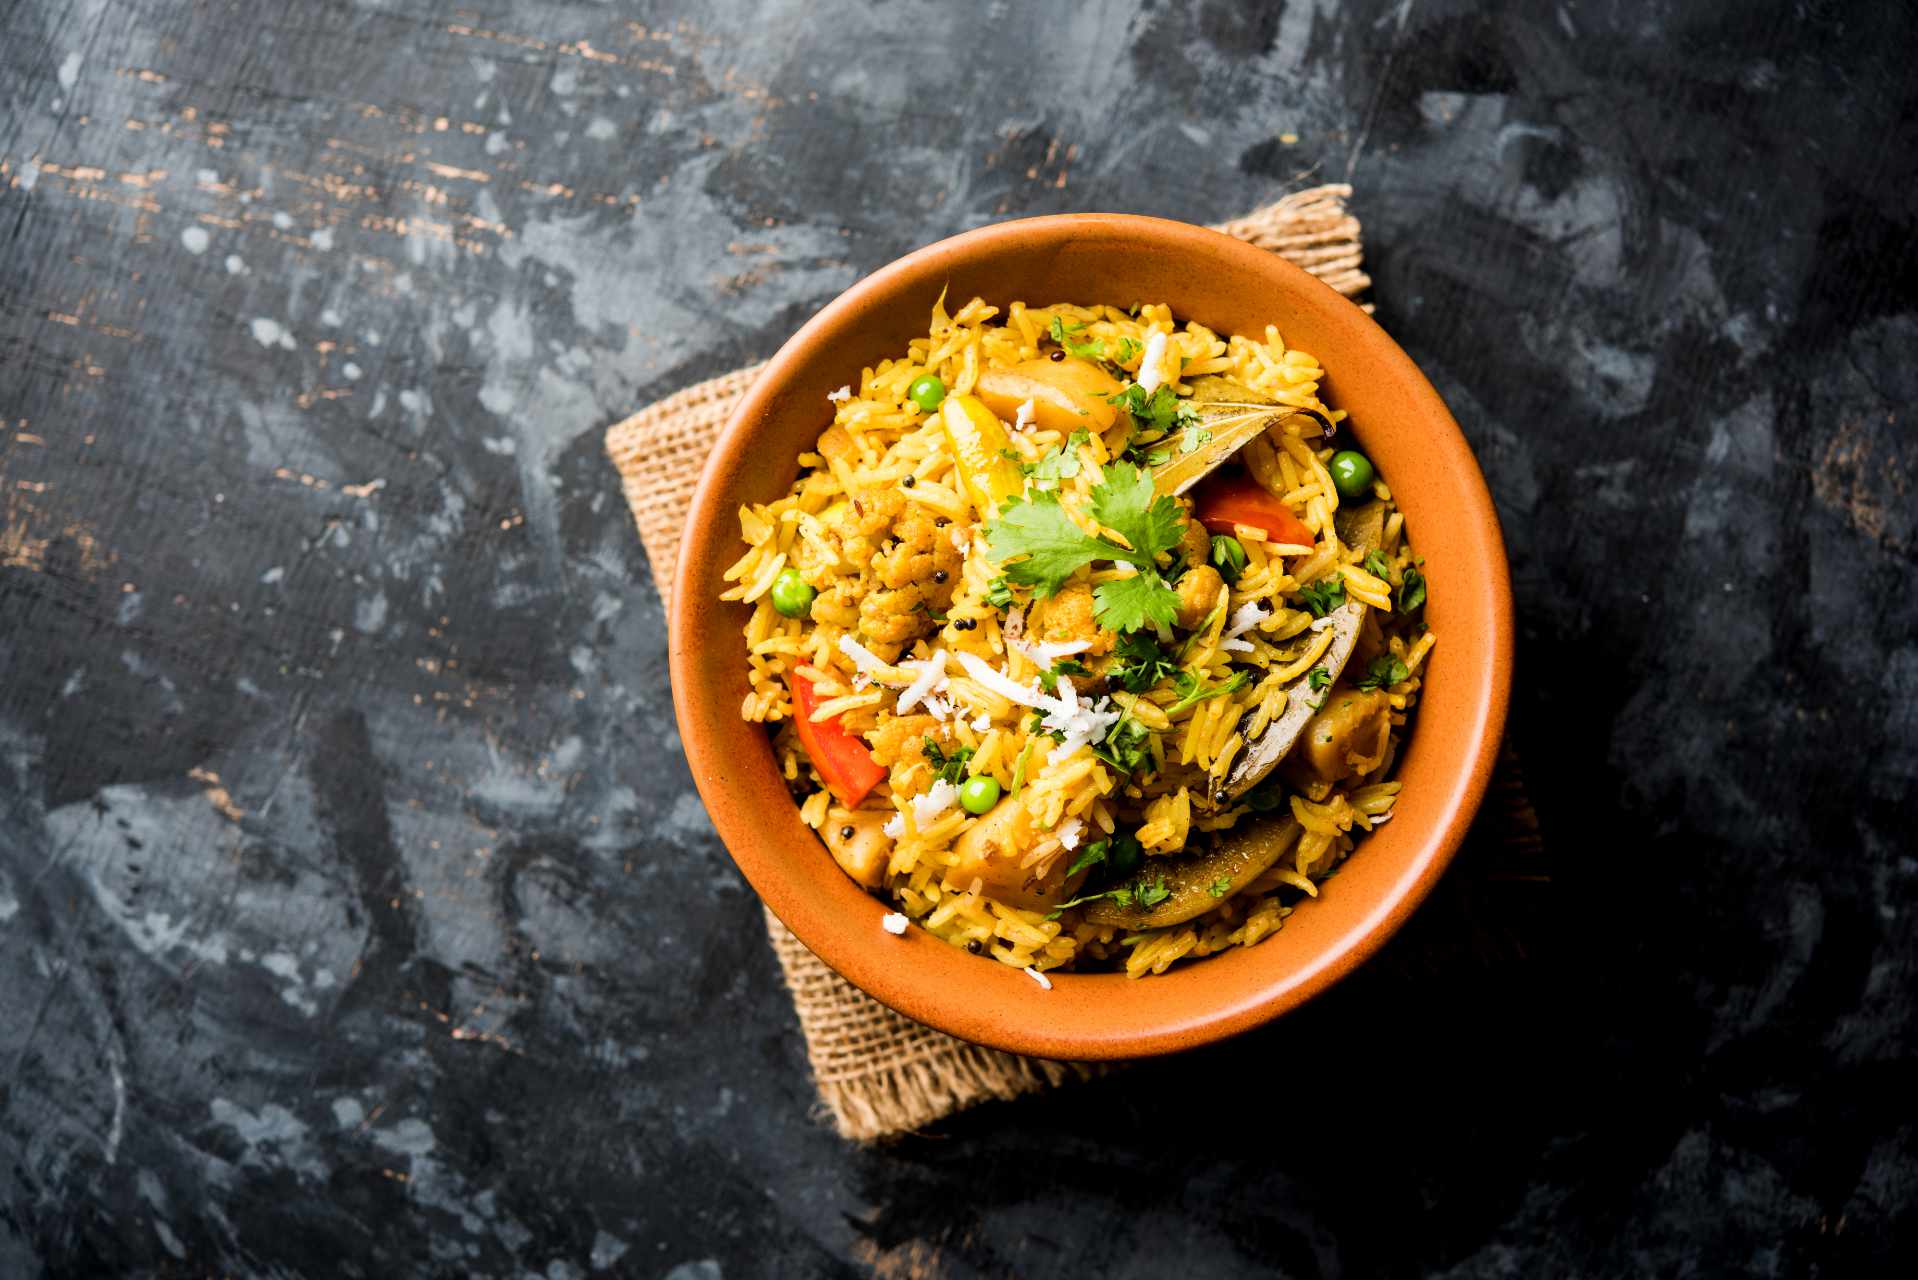 Antica-drogheria - Riso al curry e spezie indiane